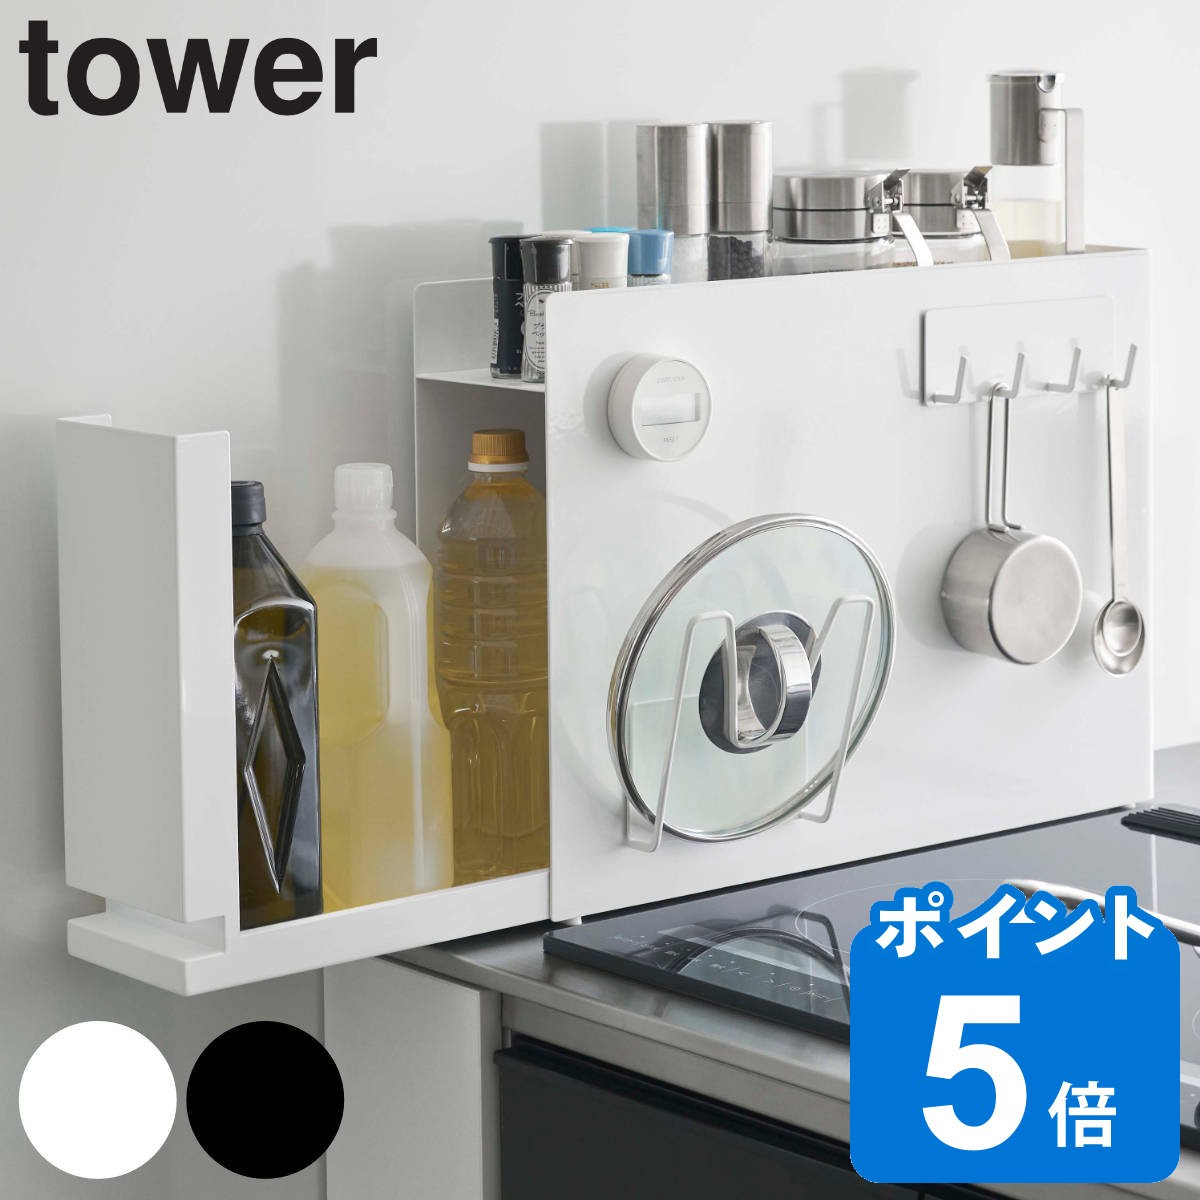 R tower B钲bN ^[